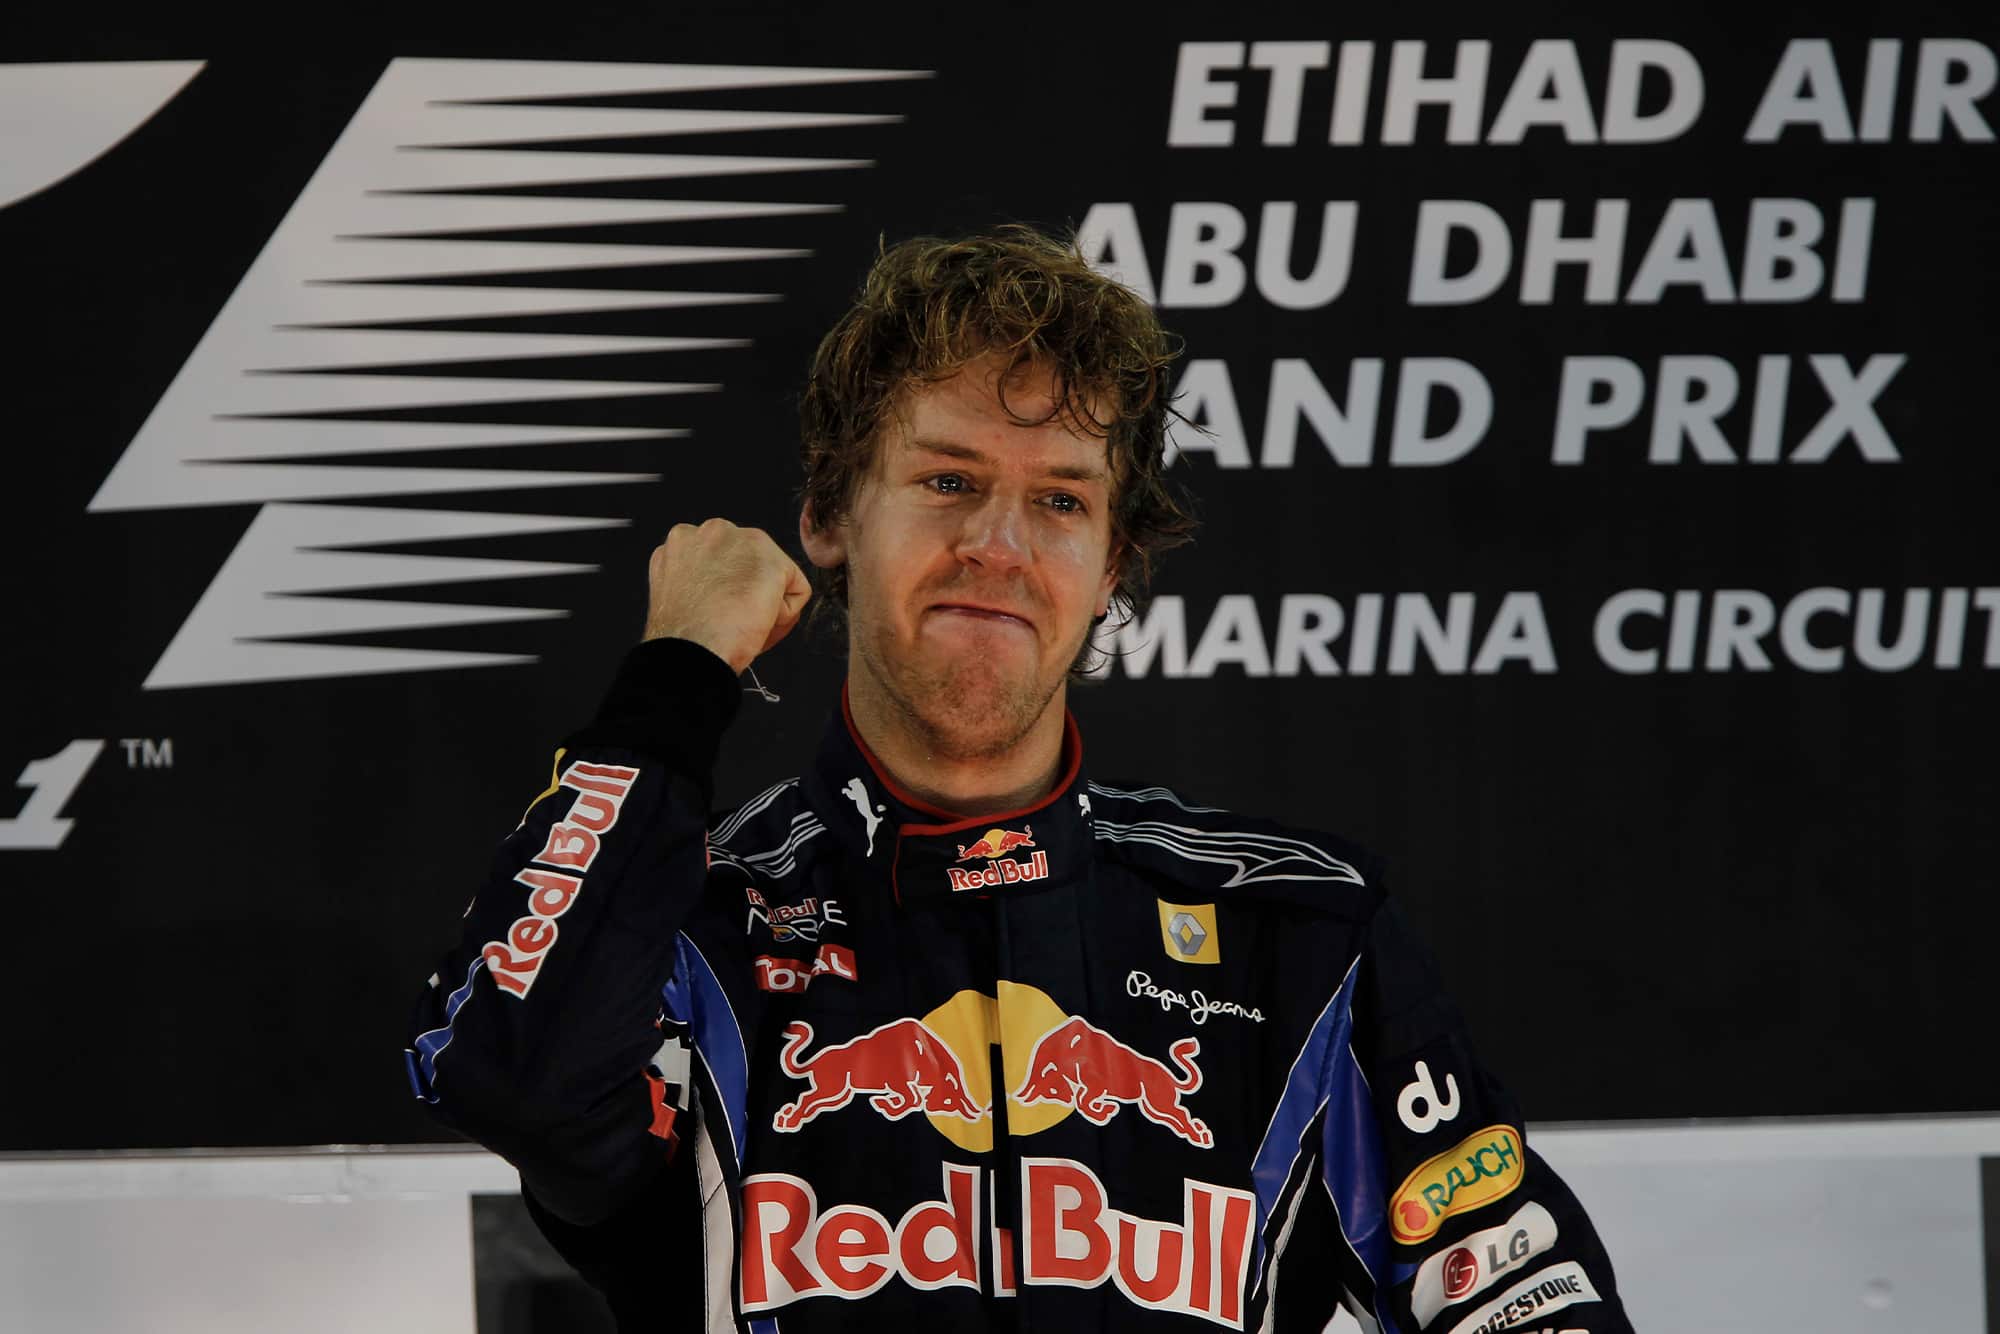 Sebastian Vettel after winning the 2010 Formula 1 world championship